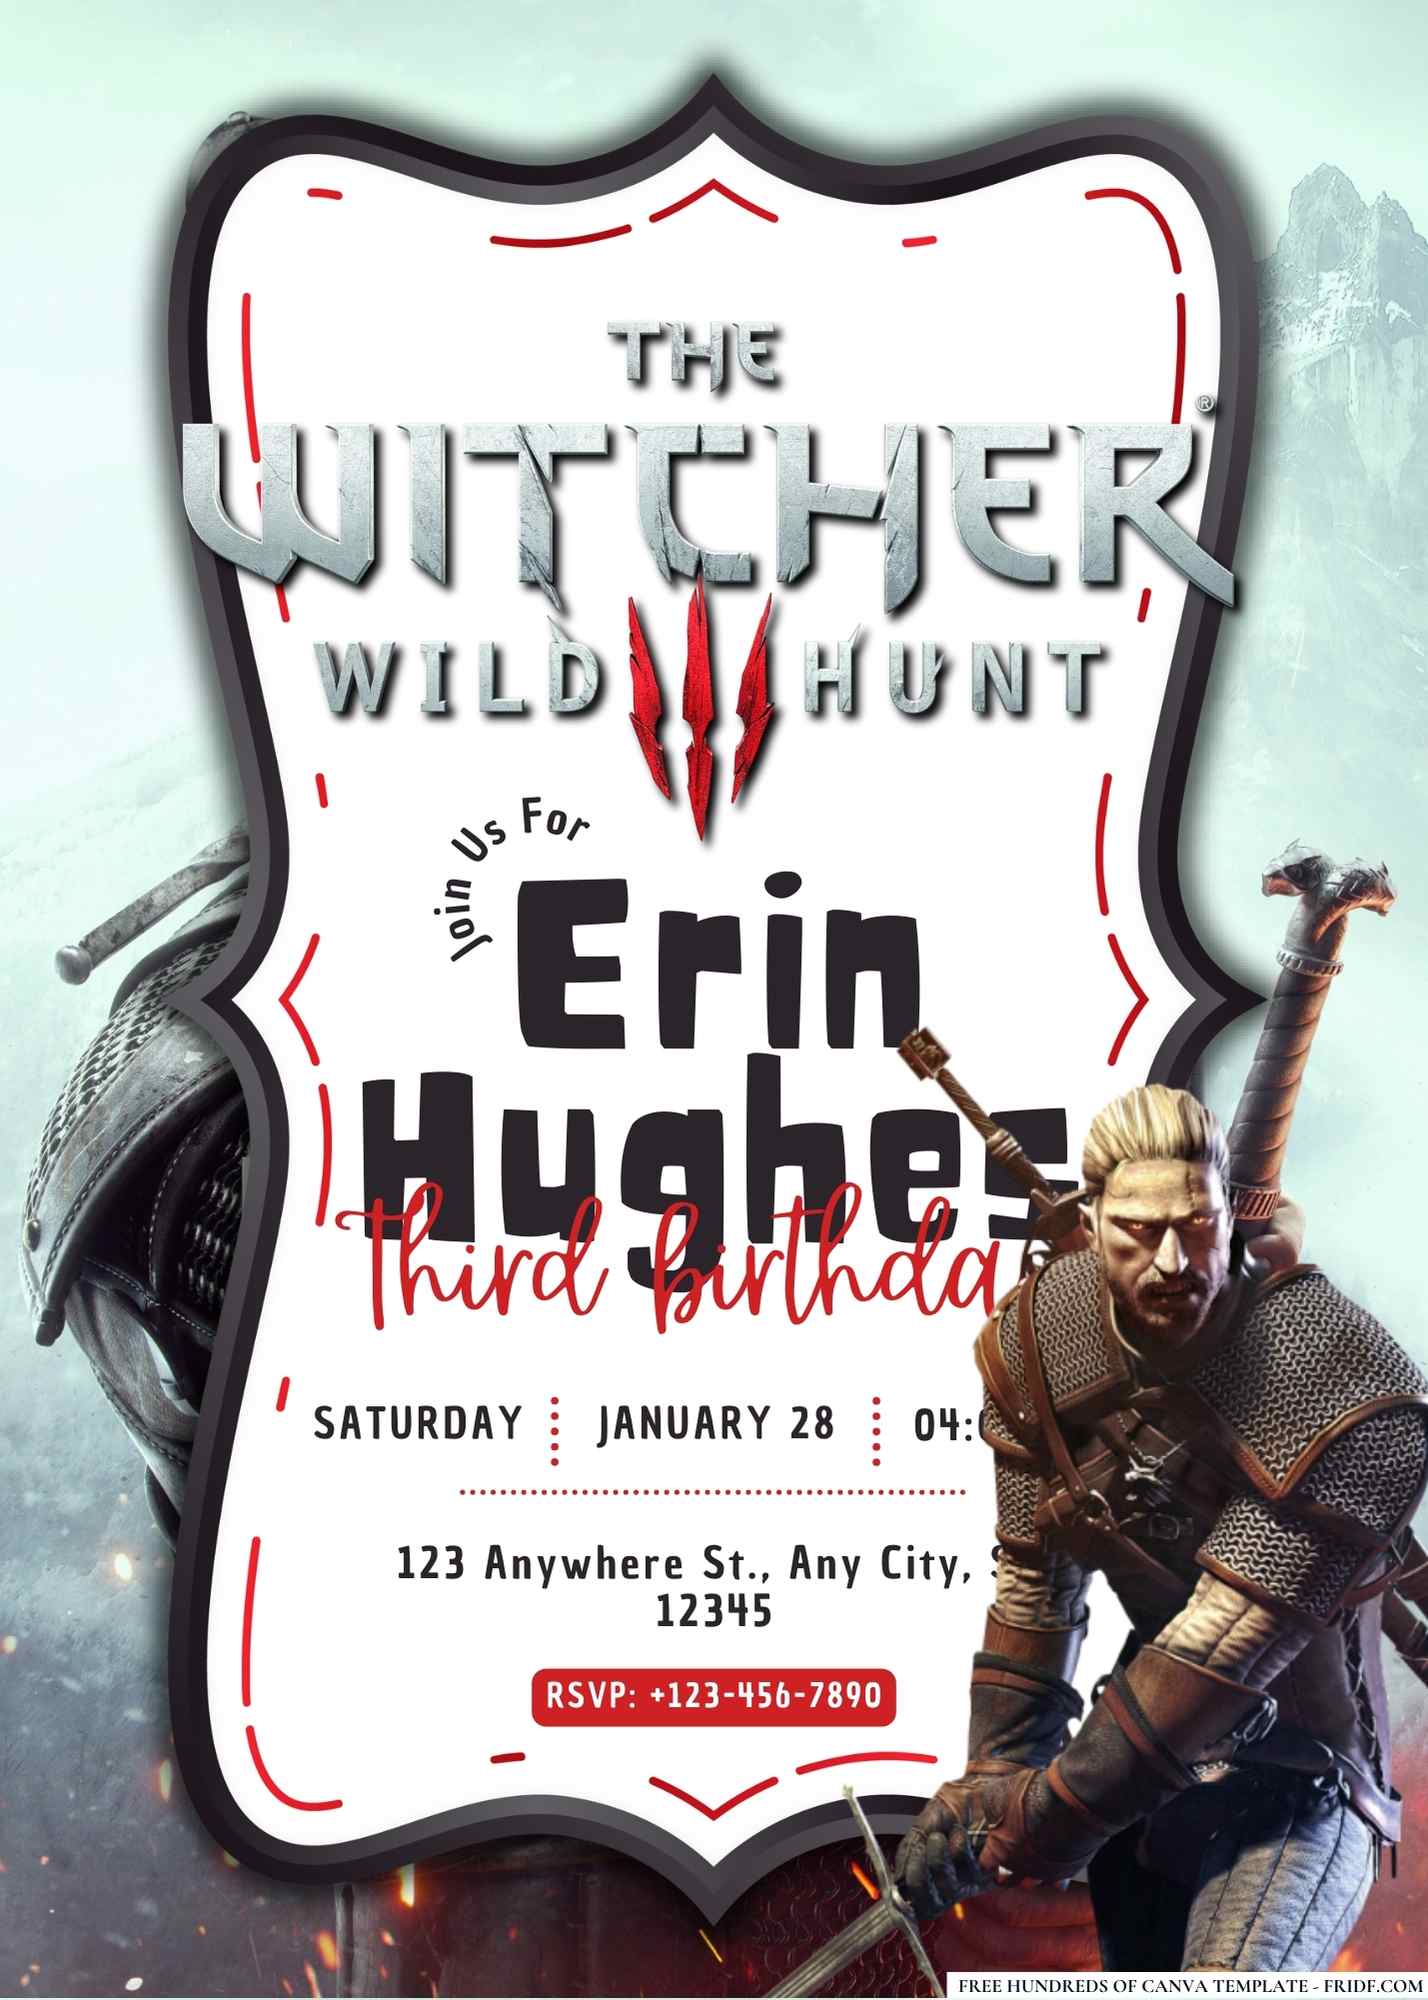 FREE Editable The Witcher 3: Wild Hunt Birthday Invitation